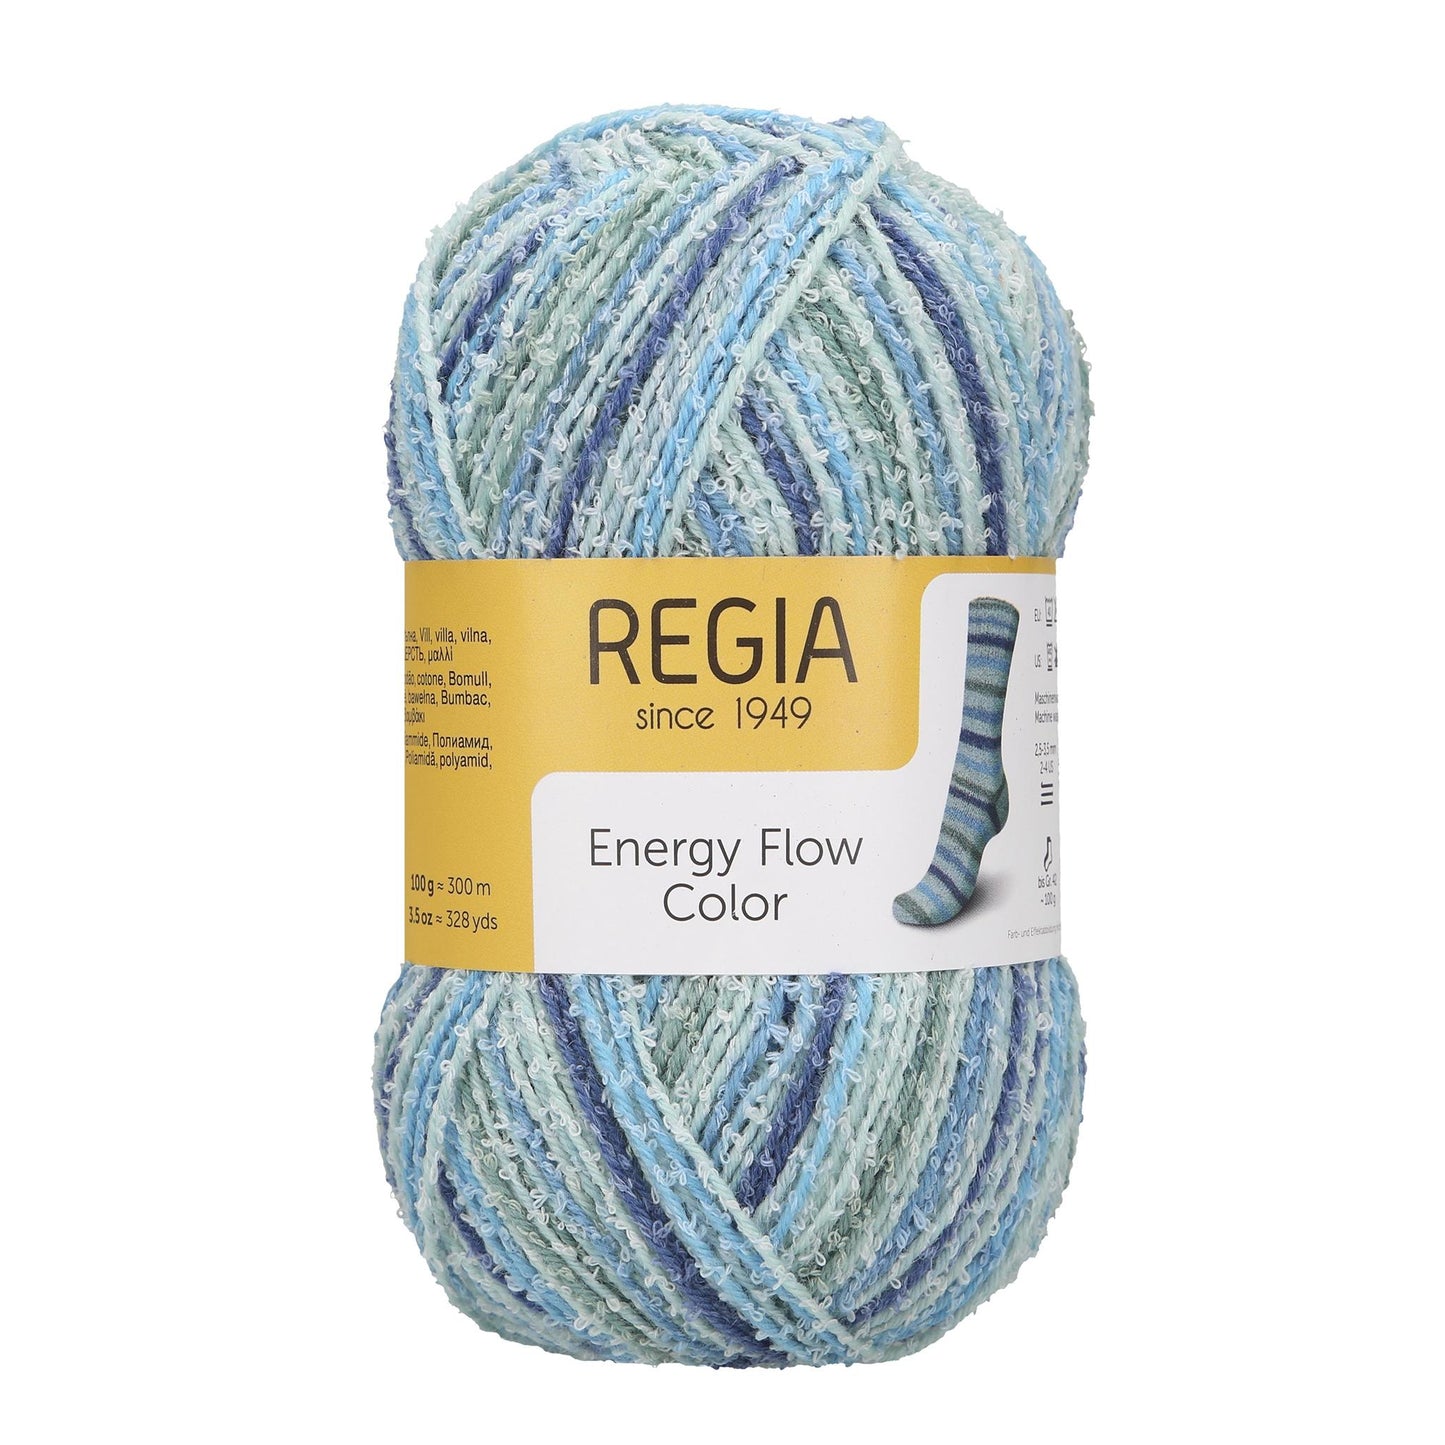 Regia Energy Flow 4-ply 100g, 90639, color relax color 181